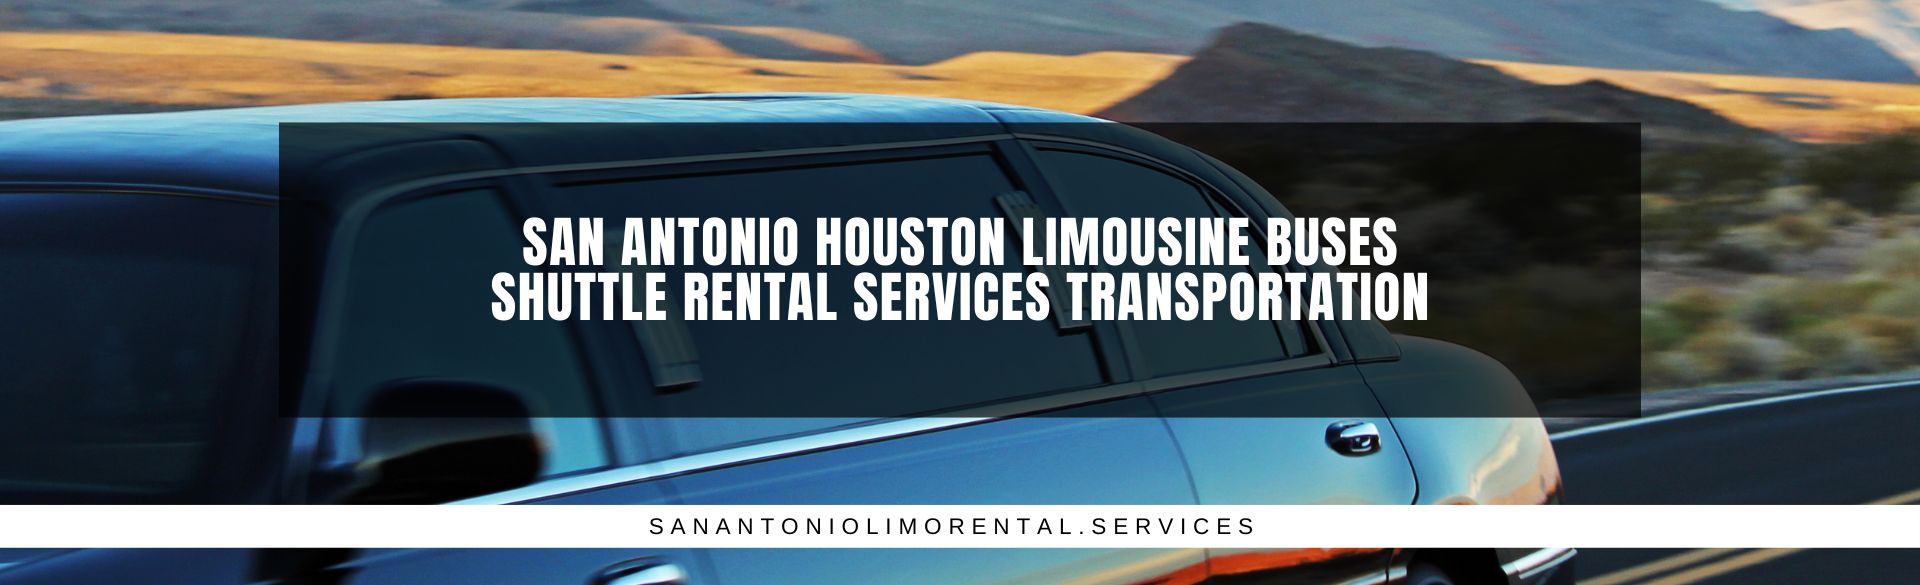 San Antonio Houston Limousine Buses Shuttle Rental Services Transportation